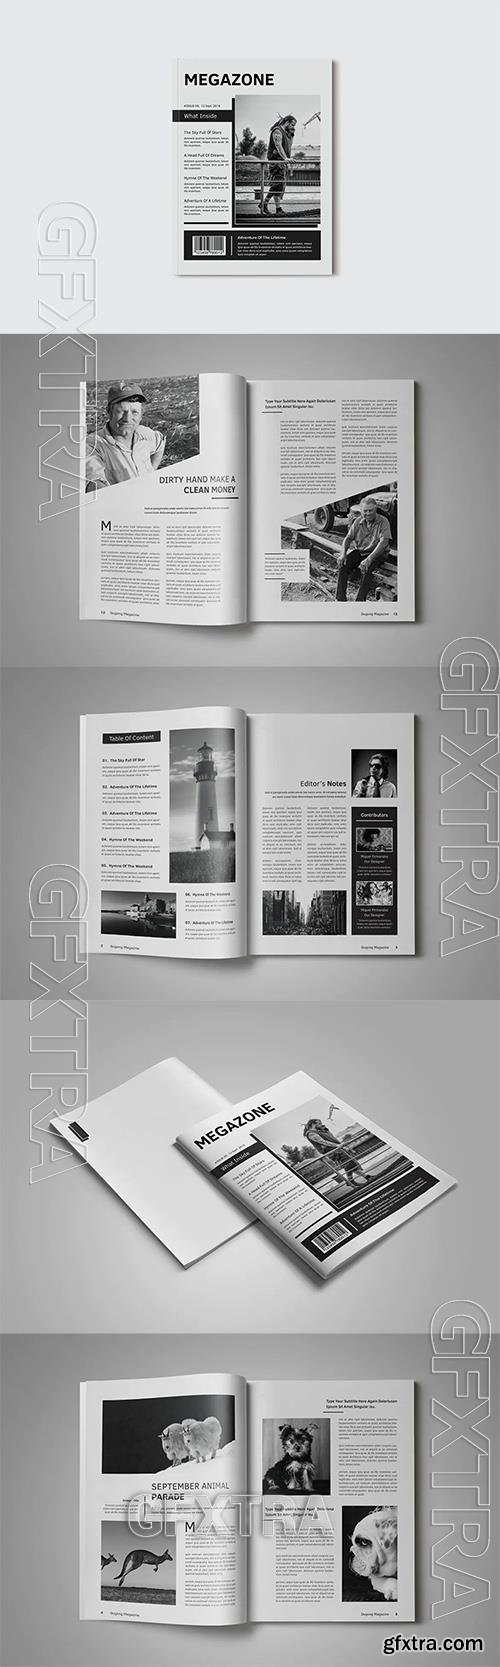 Black & White Magazine Template WS5HQRH